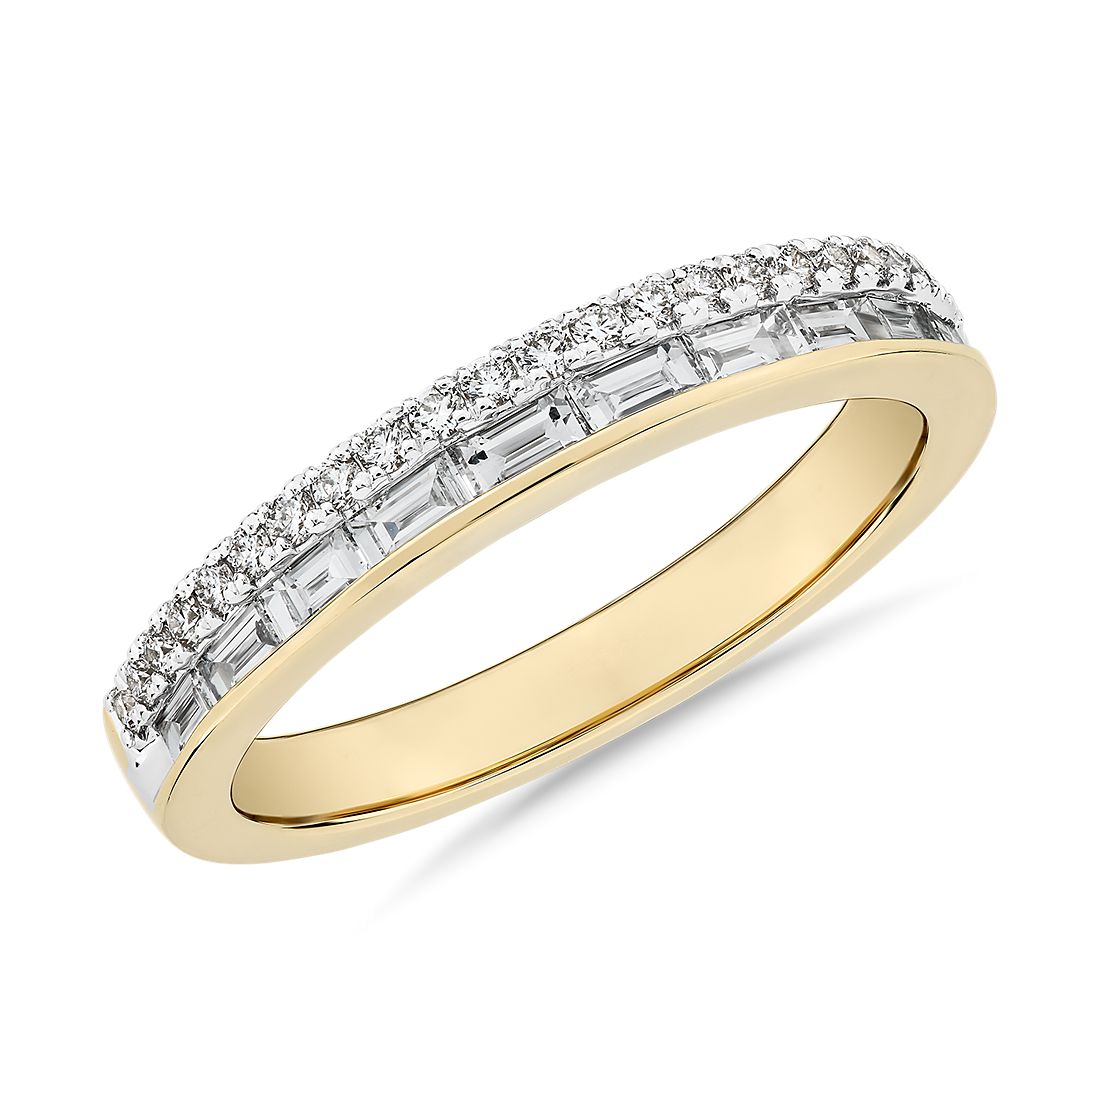 ZAC ZAC POSEN Double Row Baguette & Pavé Diamond Wedding Ring in 14k Yellow Gold (3 mm, 3/8 ct. tw.)